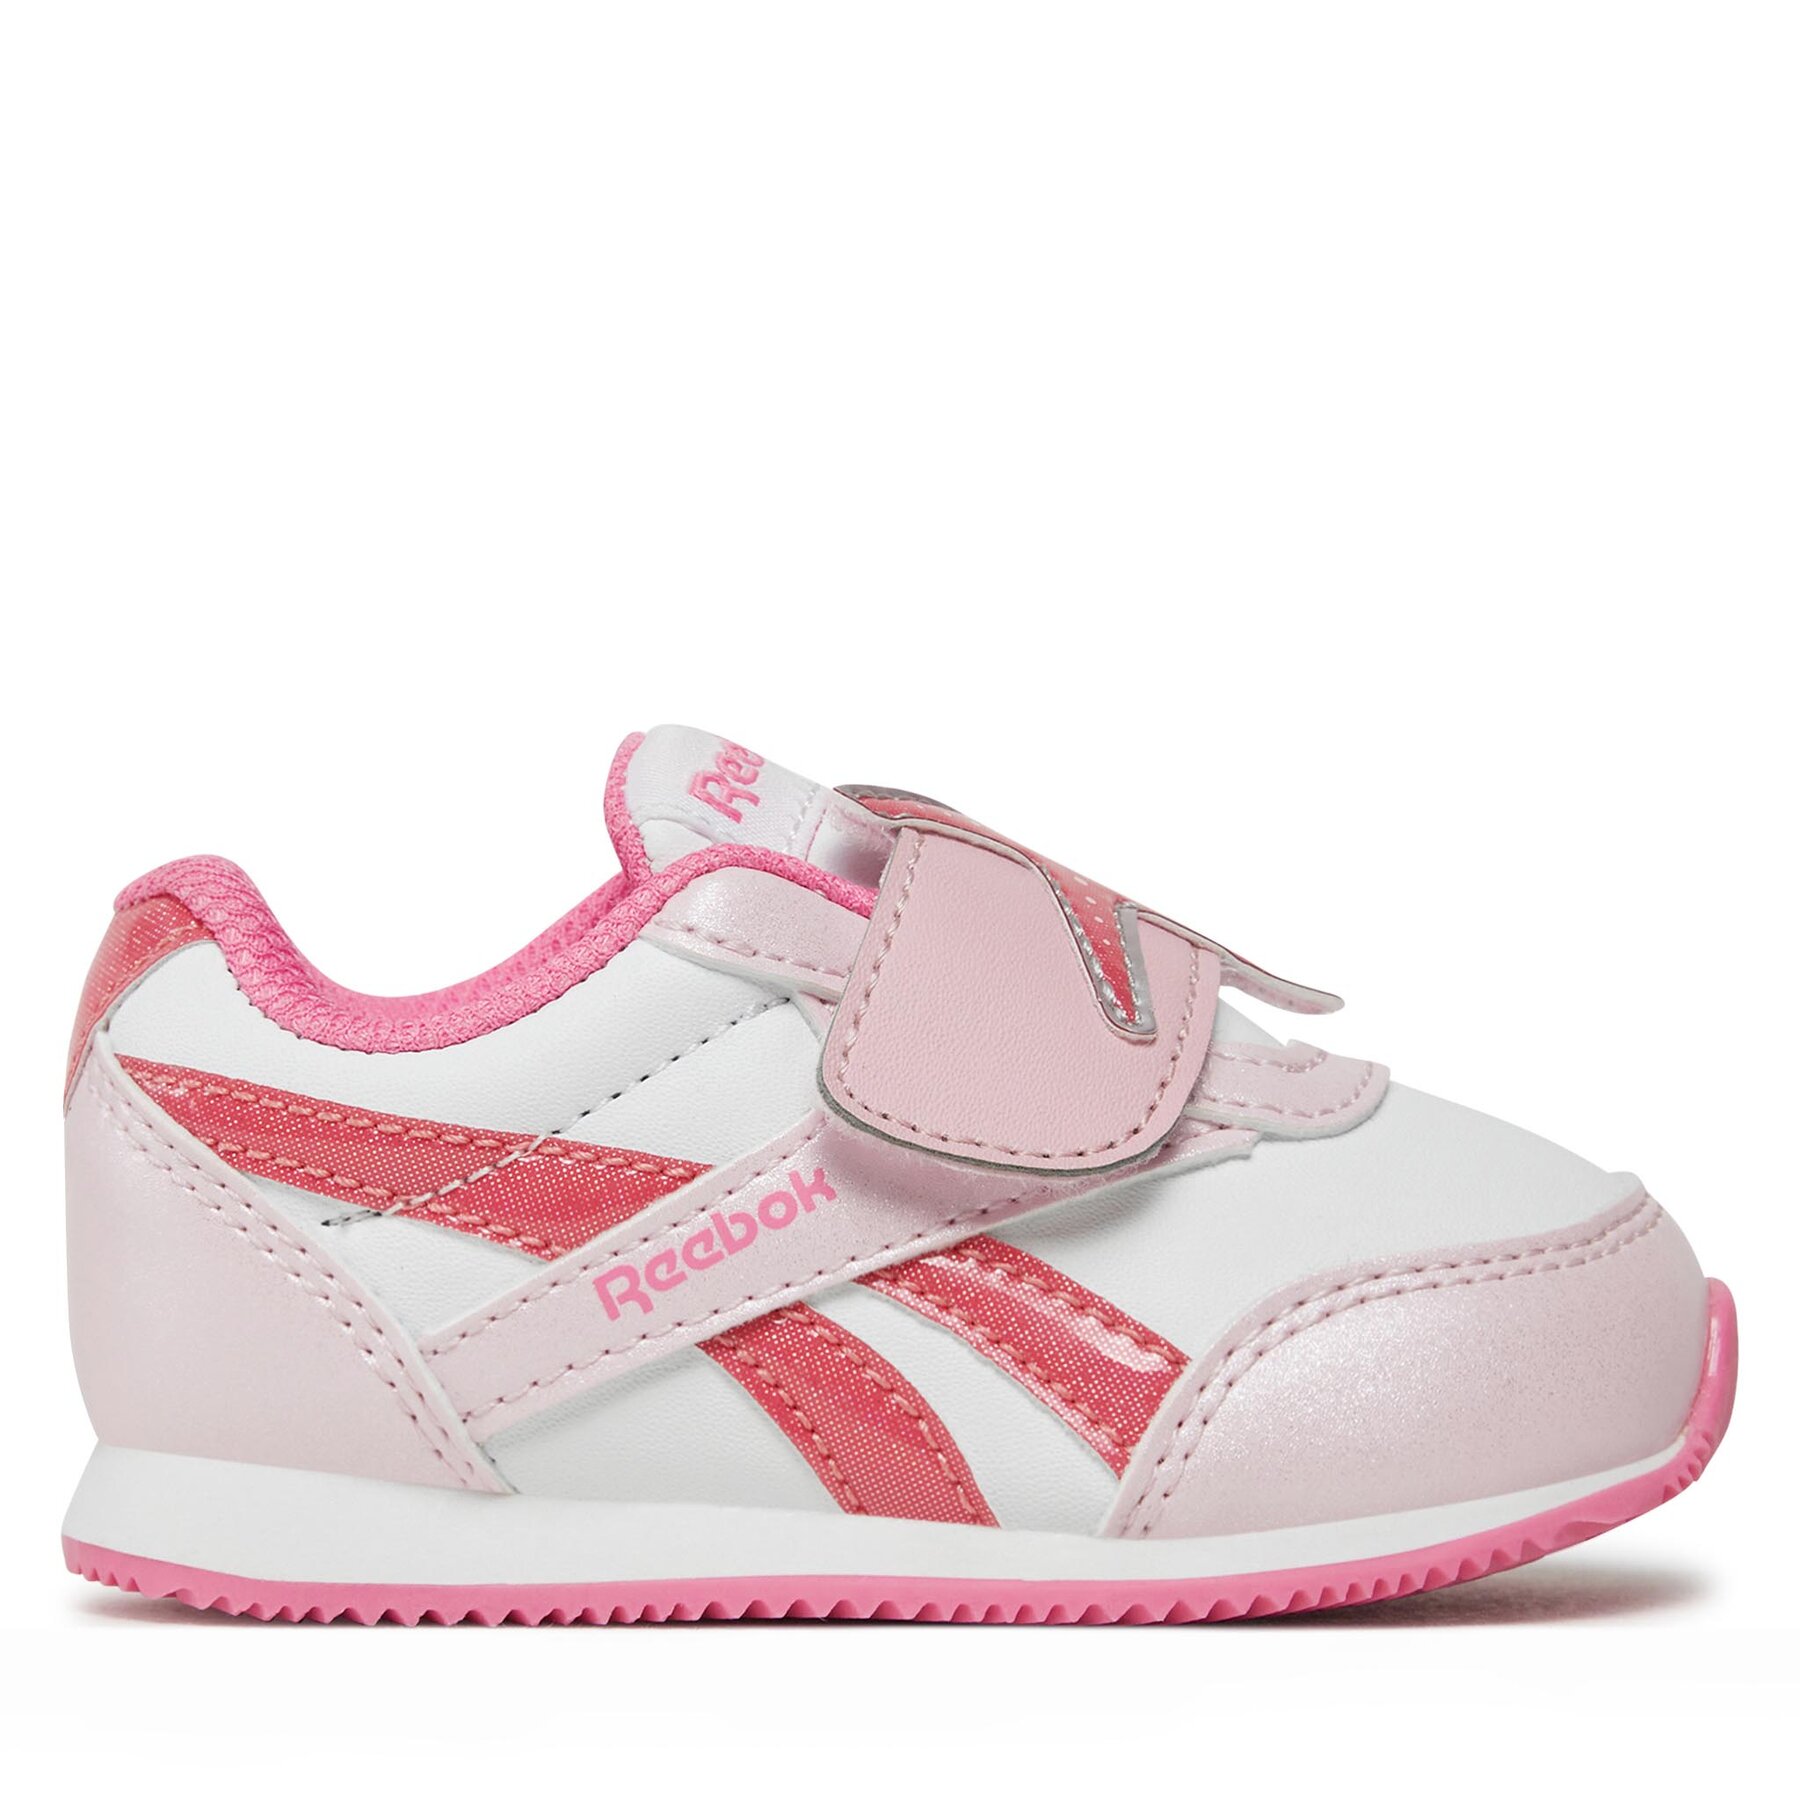 Schuhe Reebok Royal Cl Log 2.0 IE4181 White/Pink Glow/True Pink von Reebok